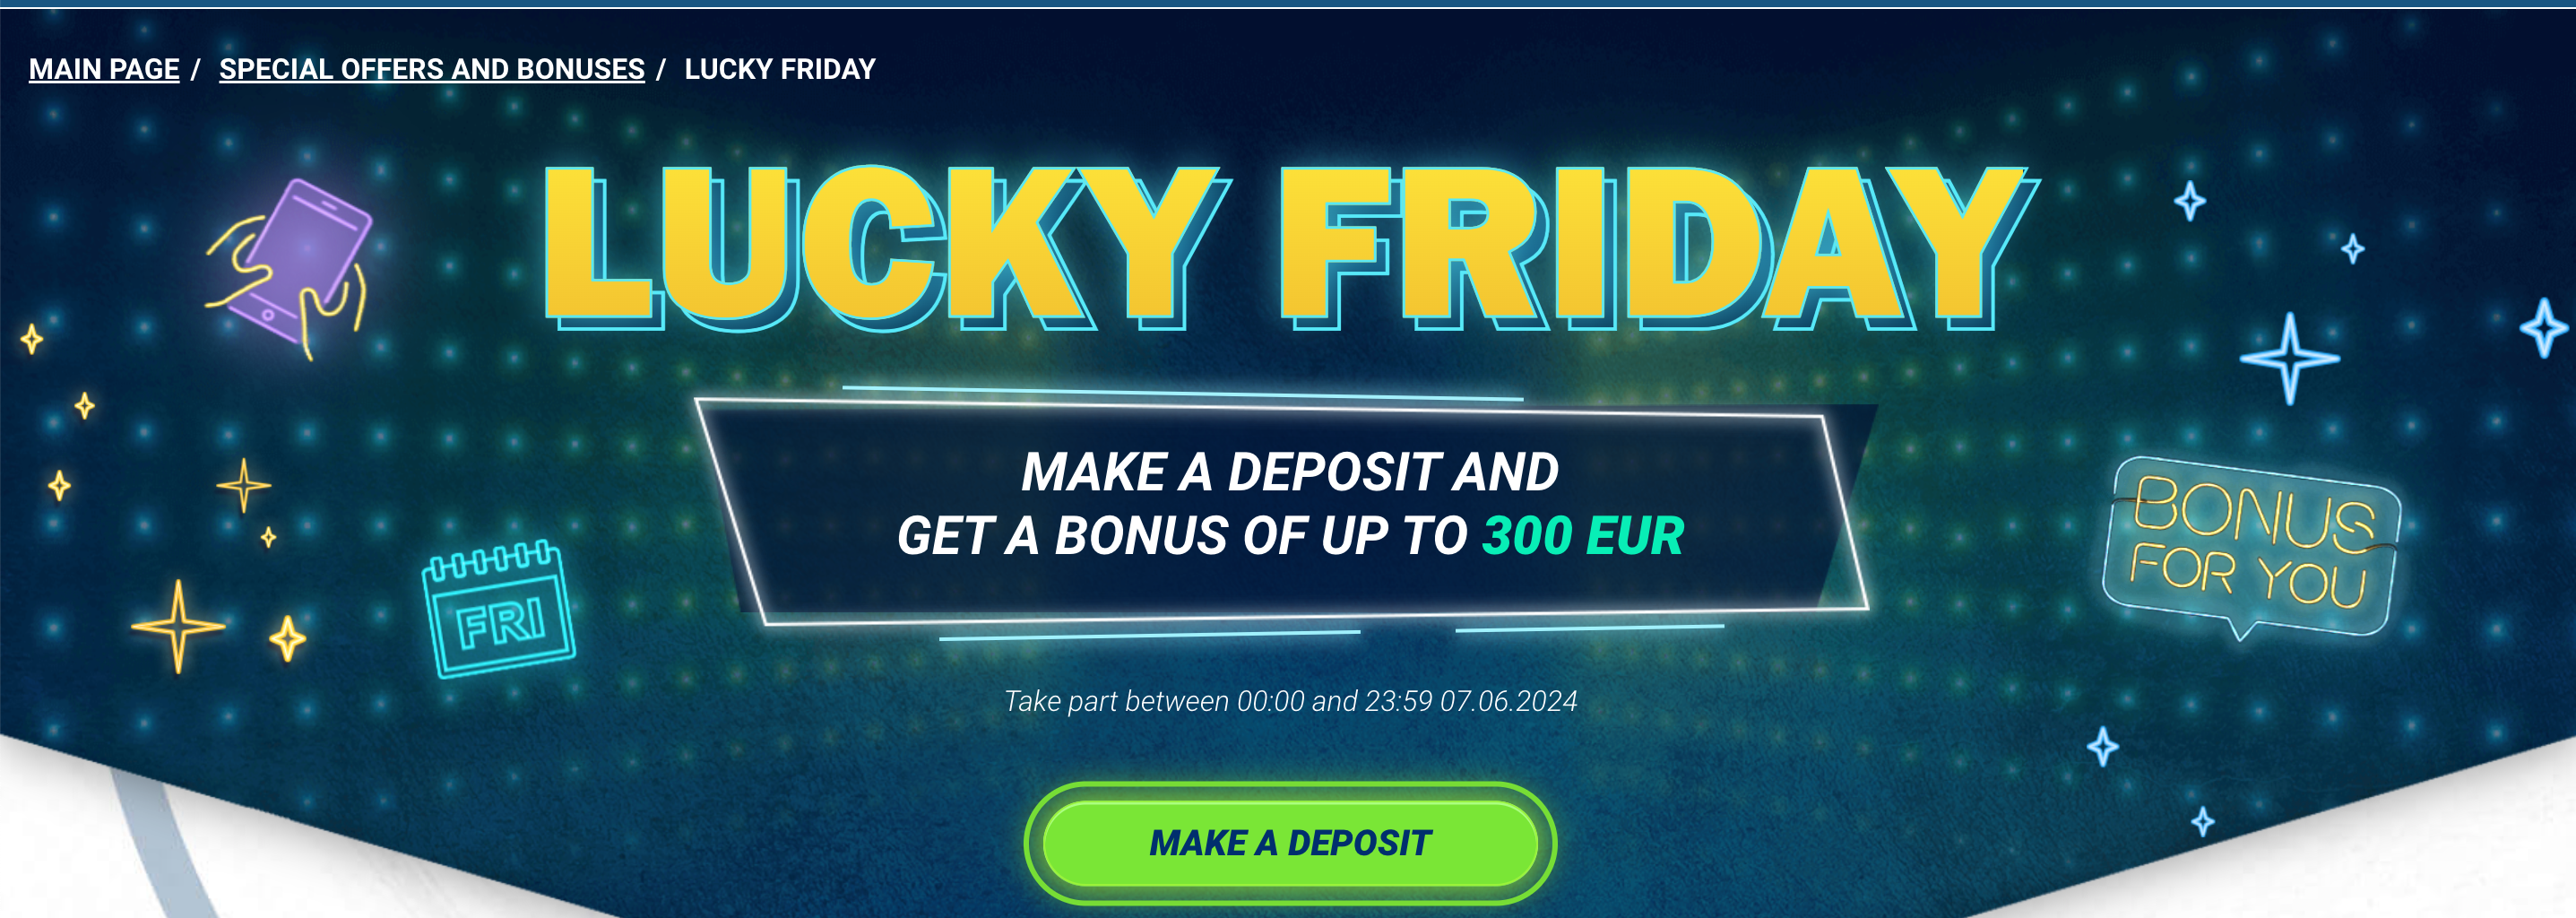 1xBet 100% Lucky Friday Bonus up to 300 EUR